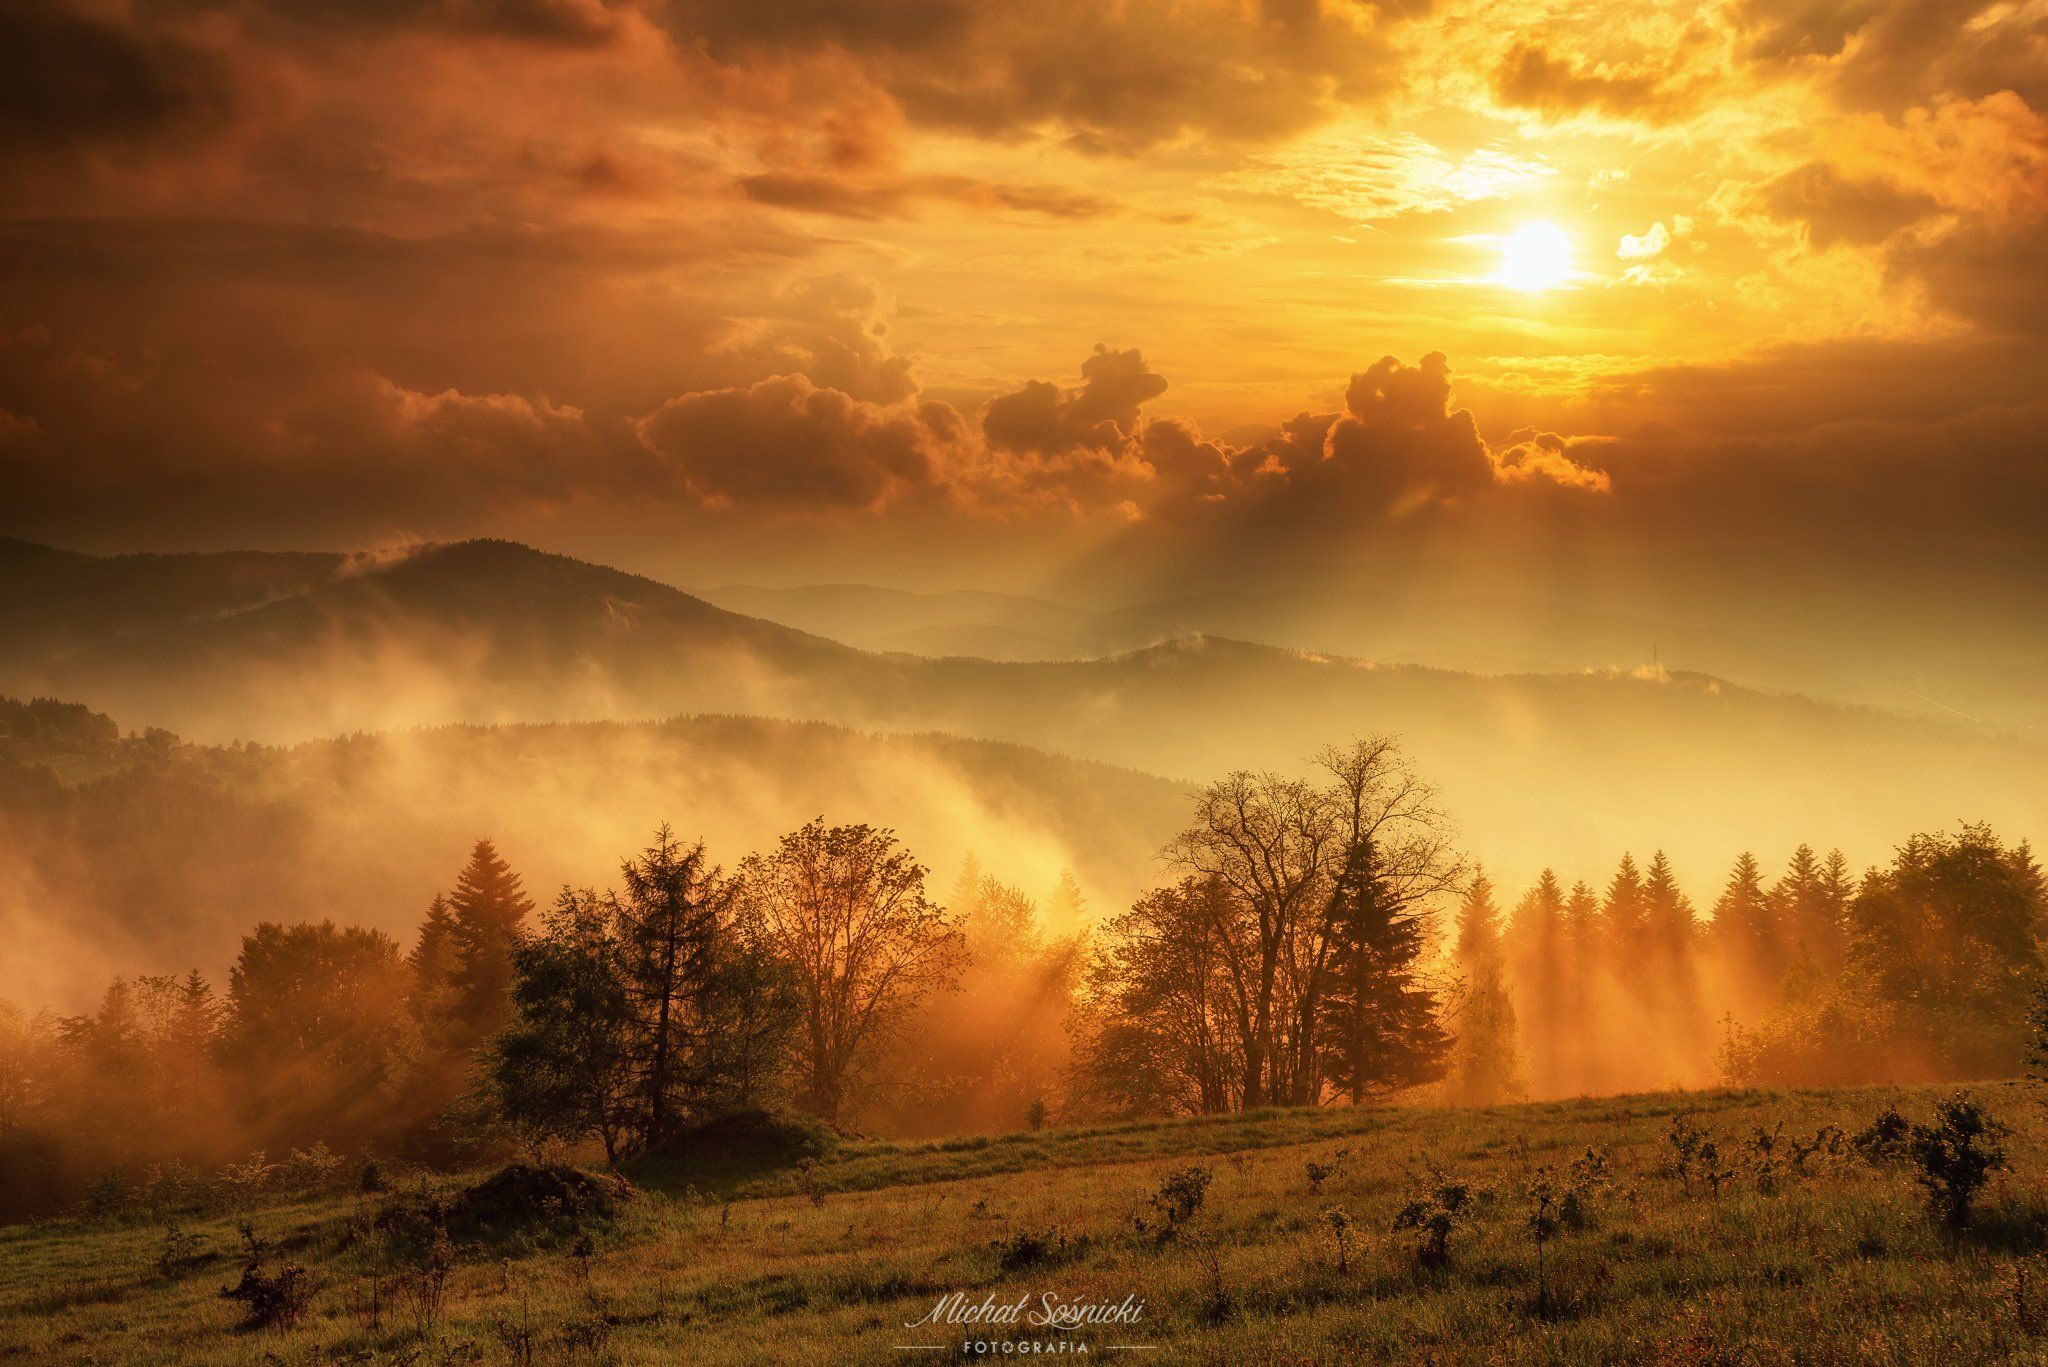 #after #storm #landscape #foggy #sun #nature #amazing #pentax #benro, Michał Sośnicki